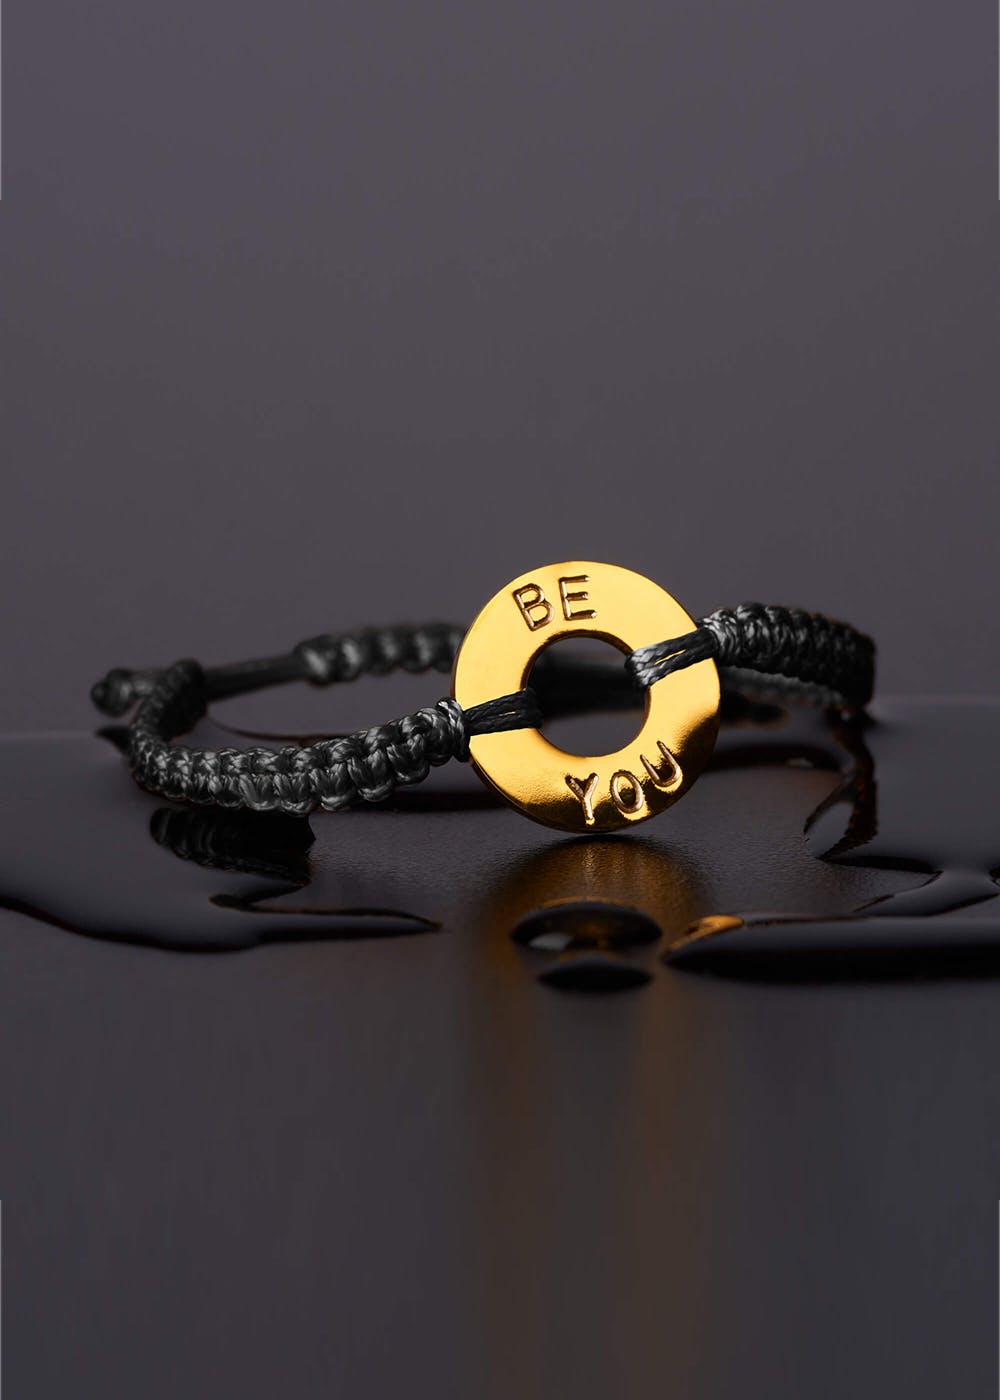 Buy Couples Bracelet Custom Name Bracelet Personalized Online in India   Etsy